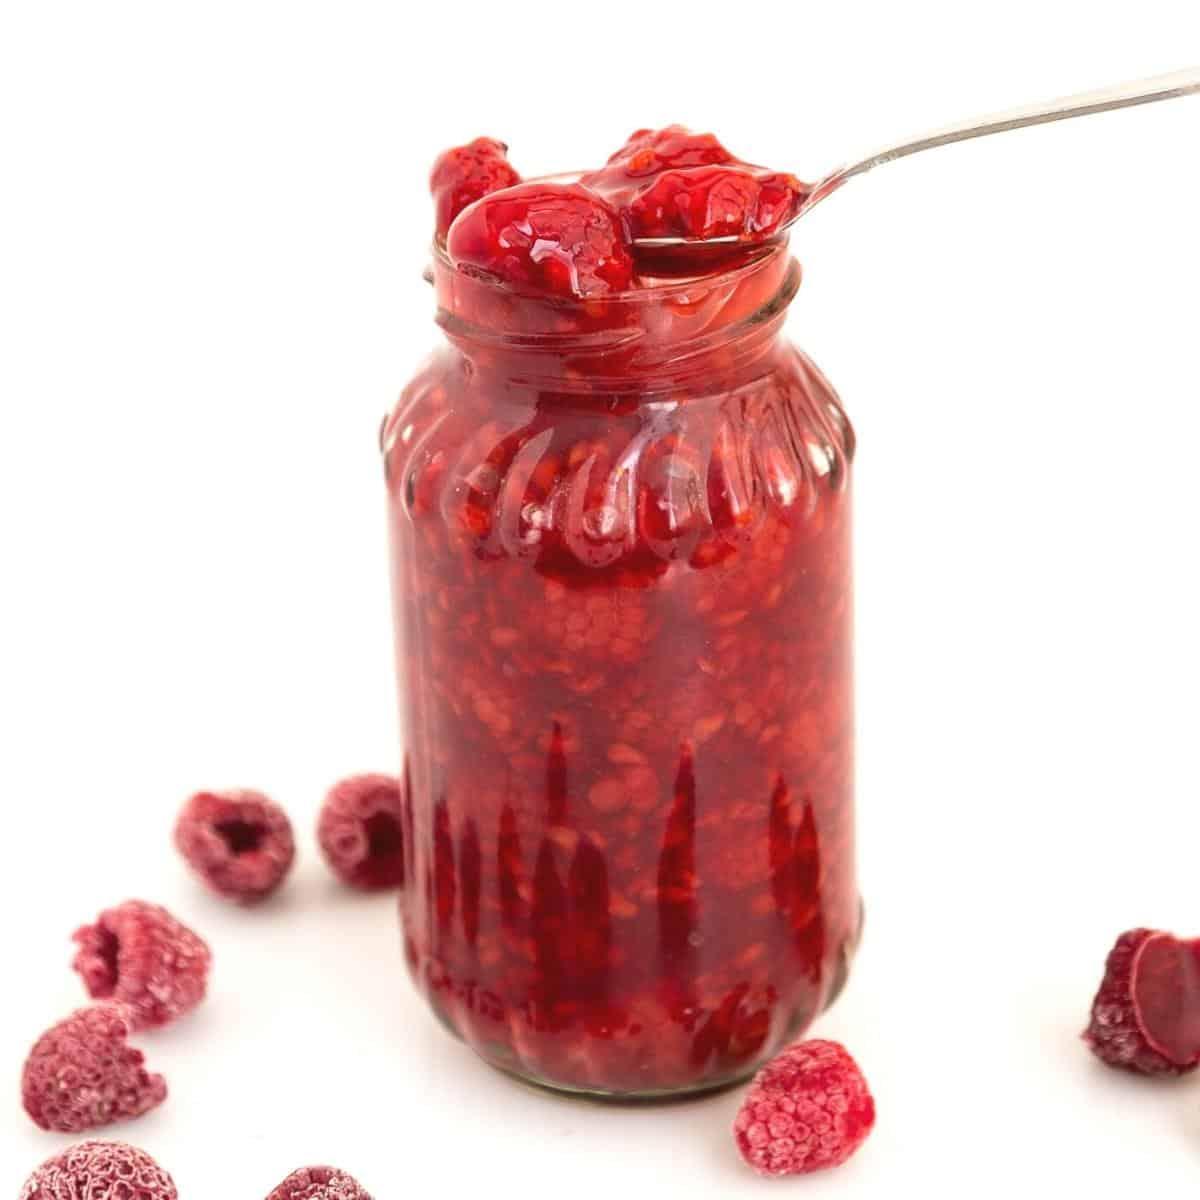 Mason jar with fruit filling - raspberries.